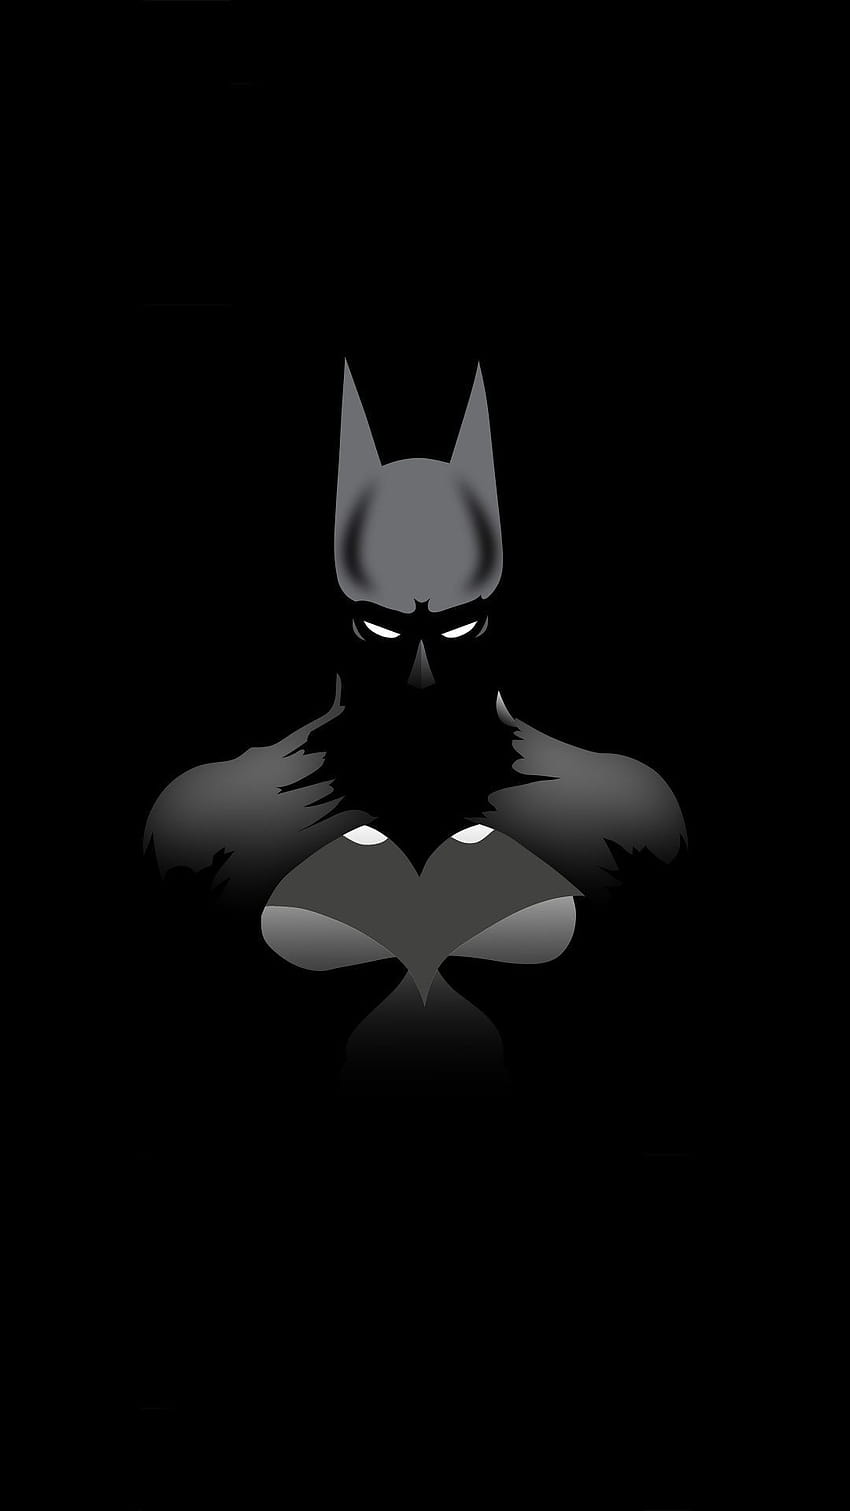 Dark knight, superhero, batman, minimalism, 1080x1920, batman mobile ...